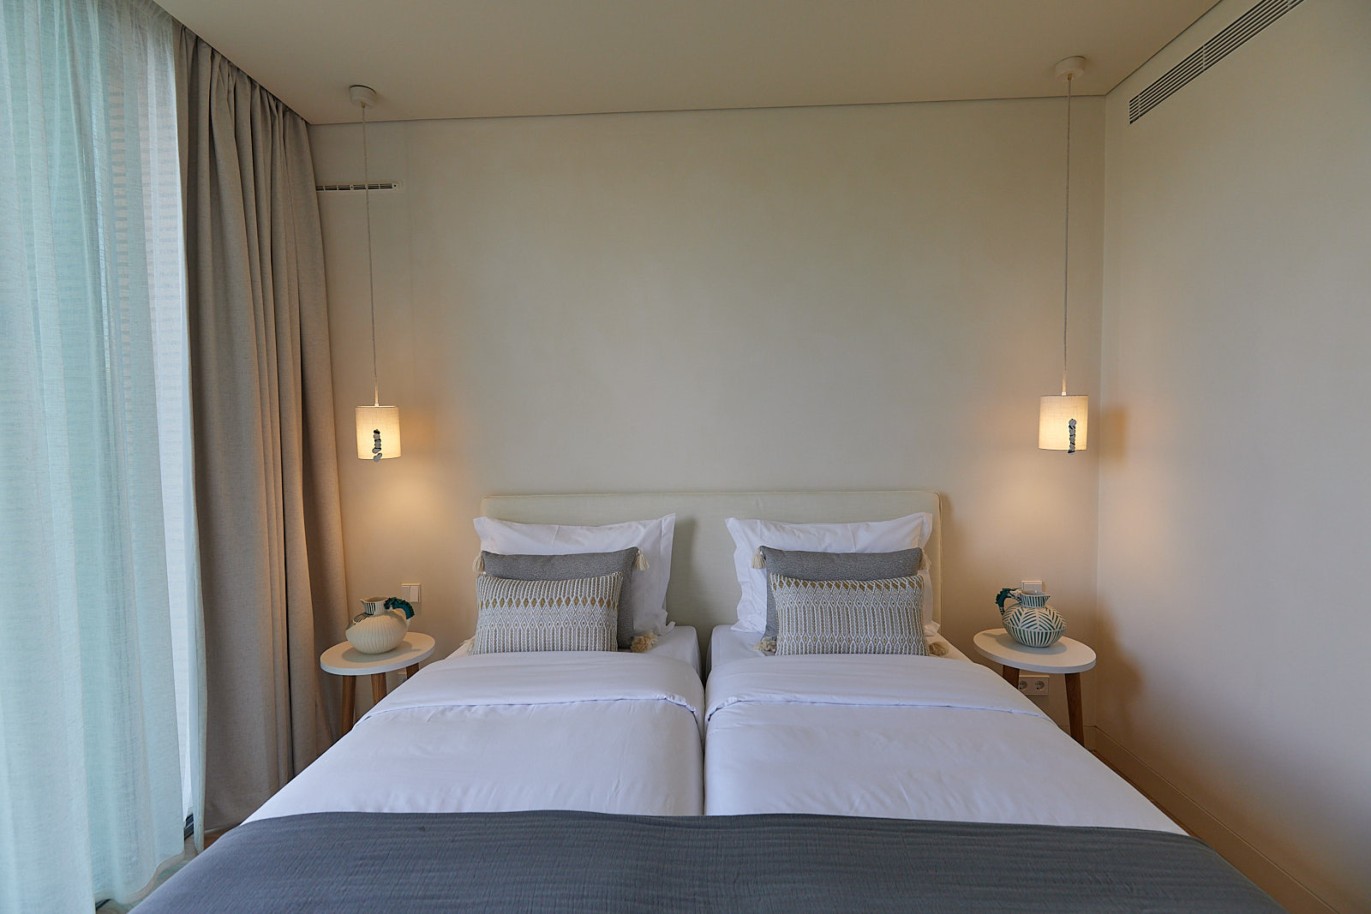 2 bedroom apartment in resort, for sale in Porches, Algarve_228722